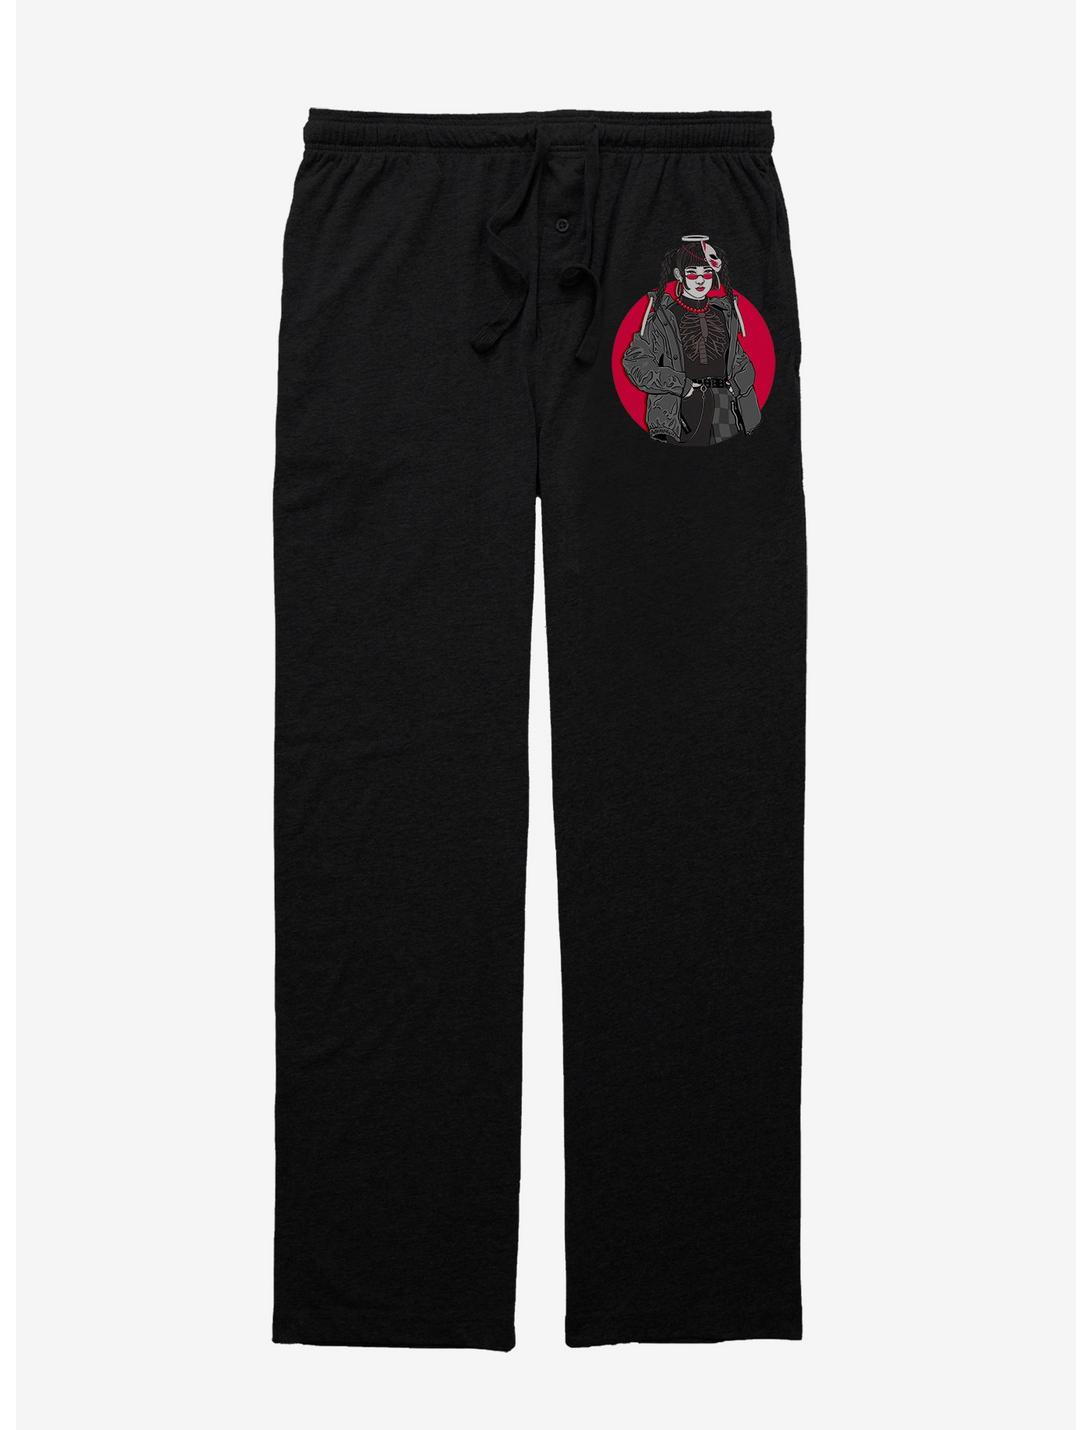 Anime Streetwear Girl Cosplay Pajama Pants, BLACK, hi-res